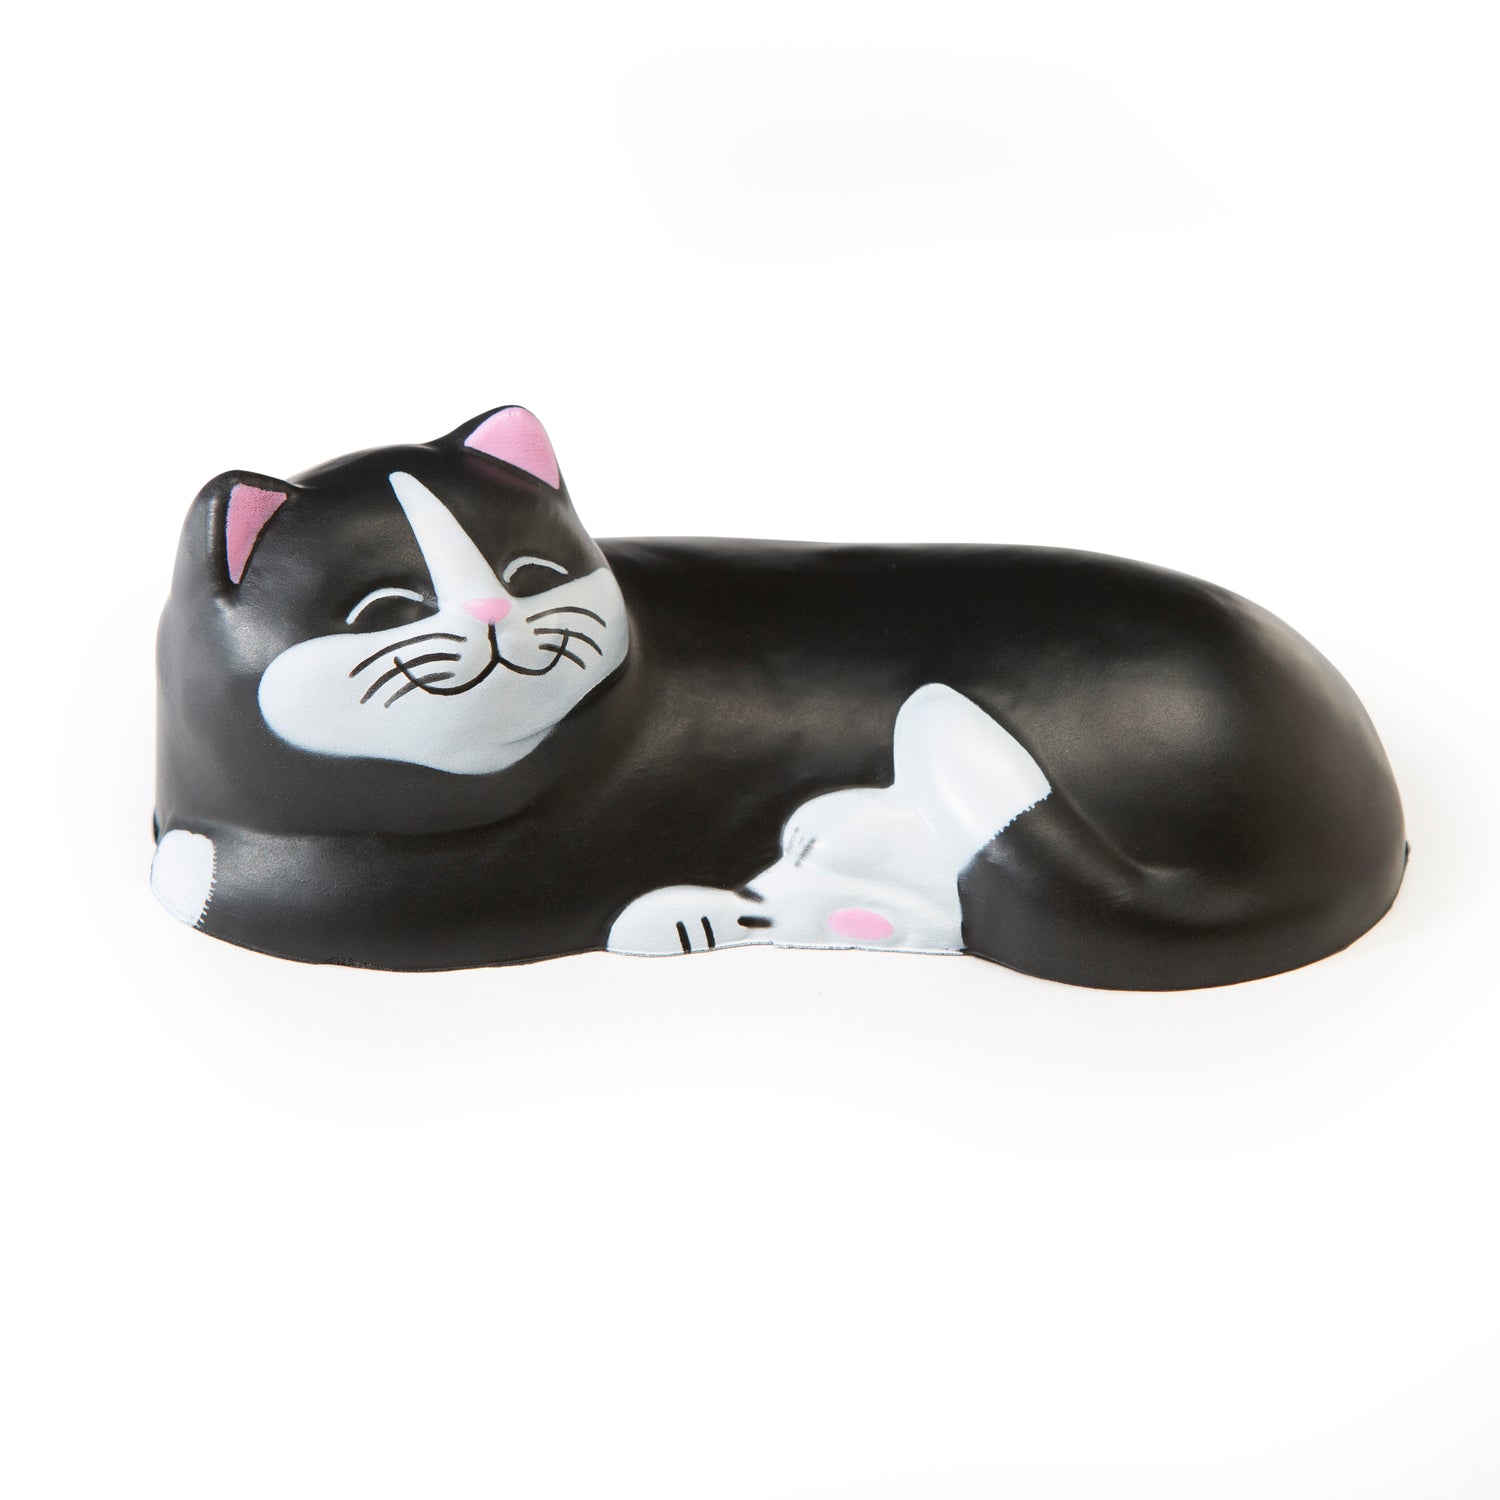 Cat Wrist Rest – Kikkerland Design Inc